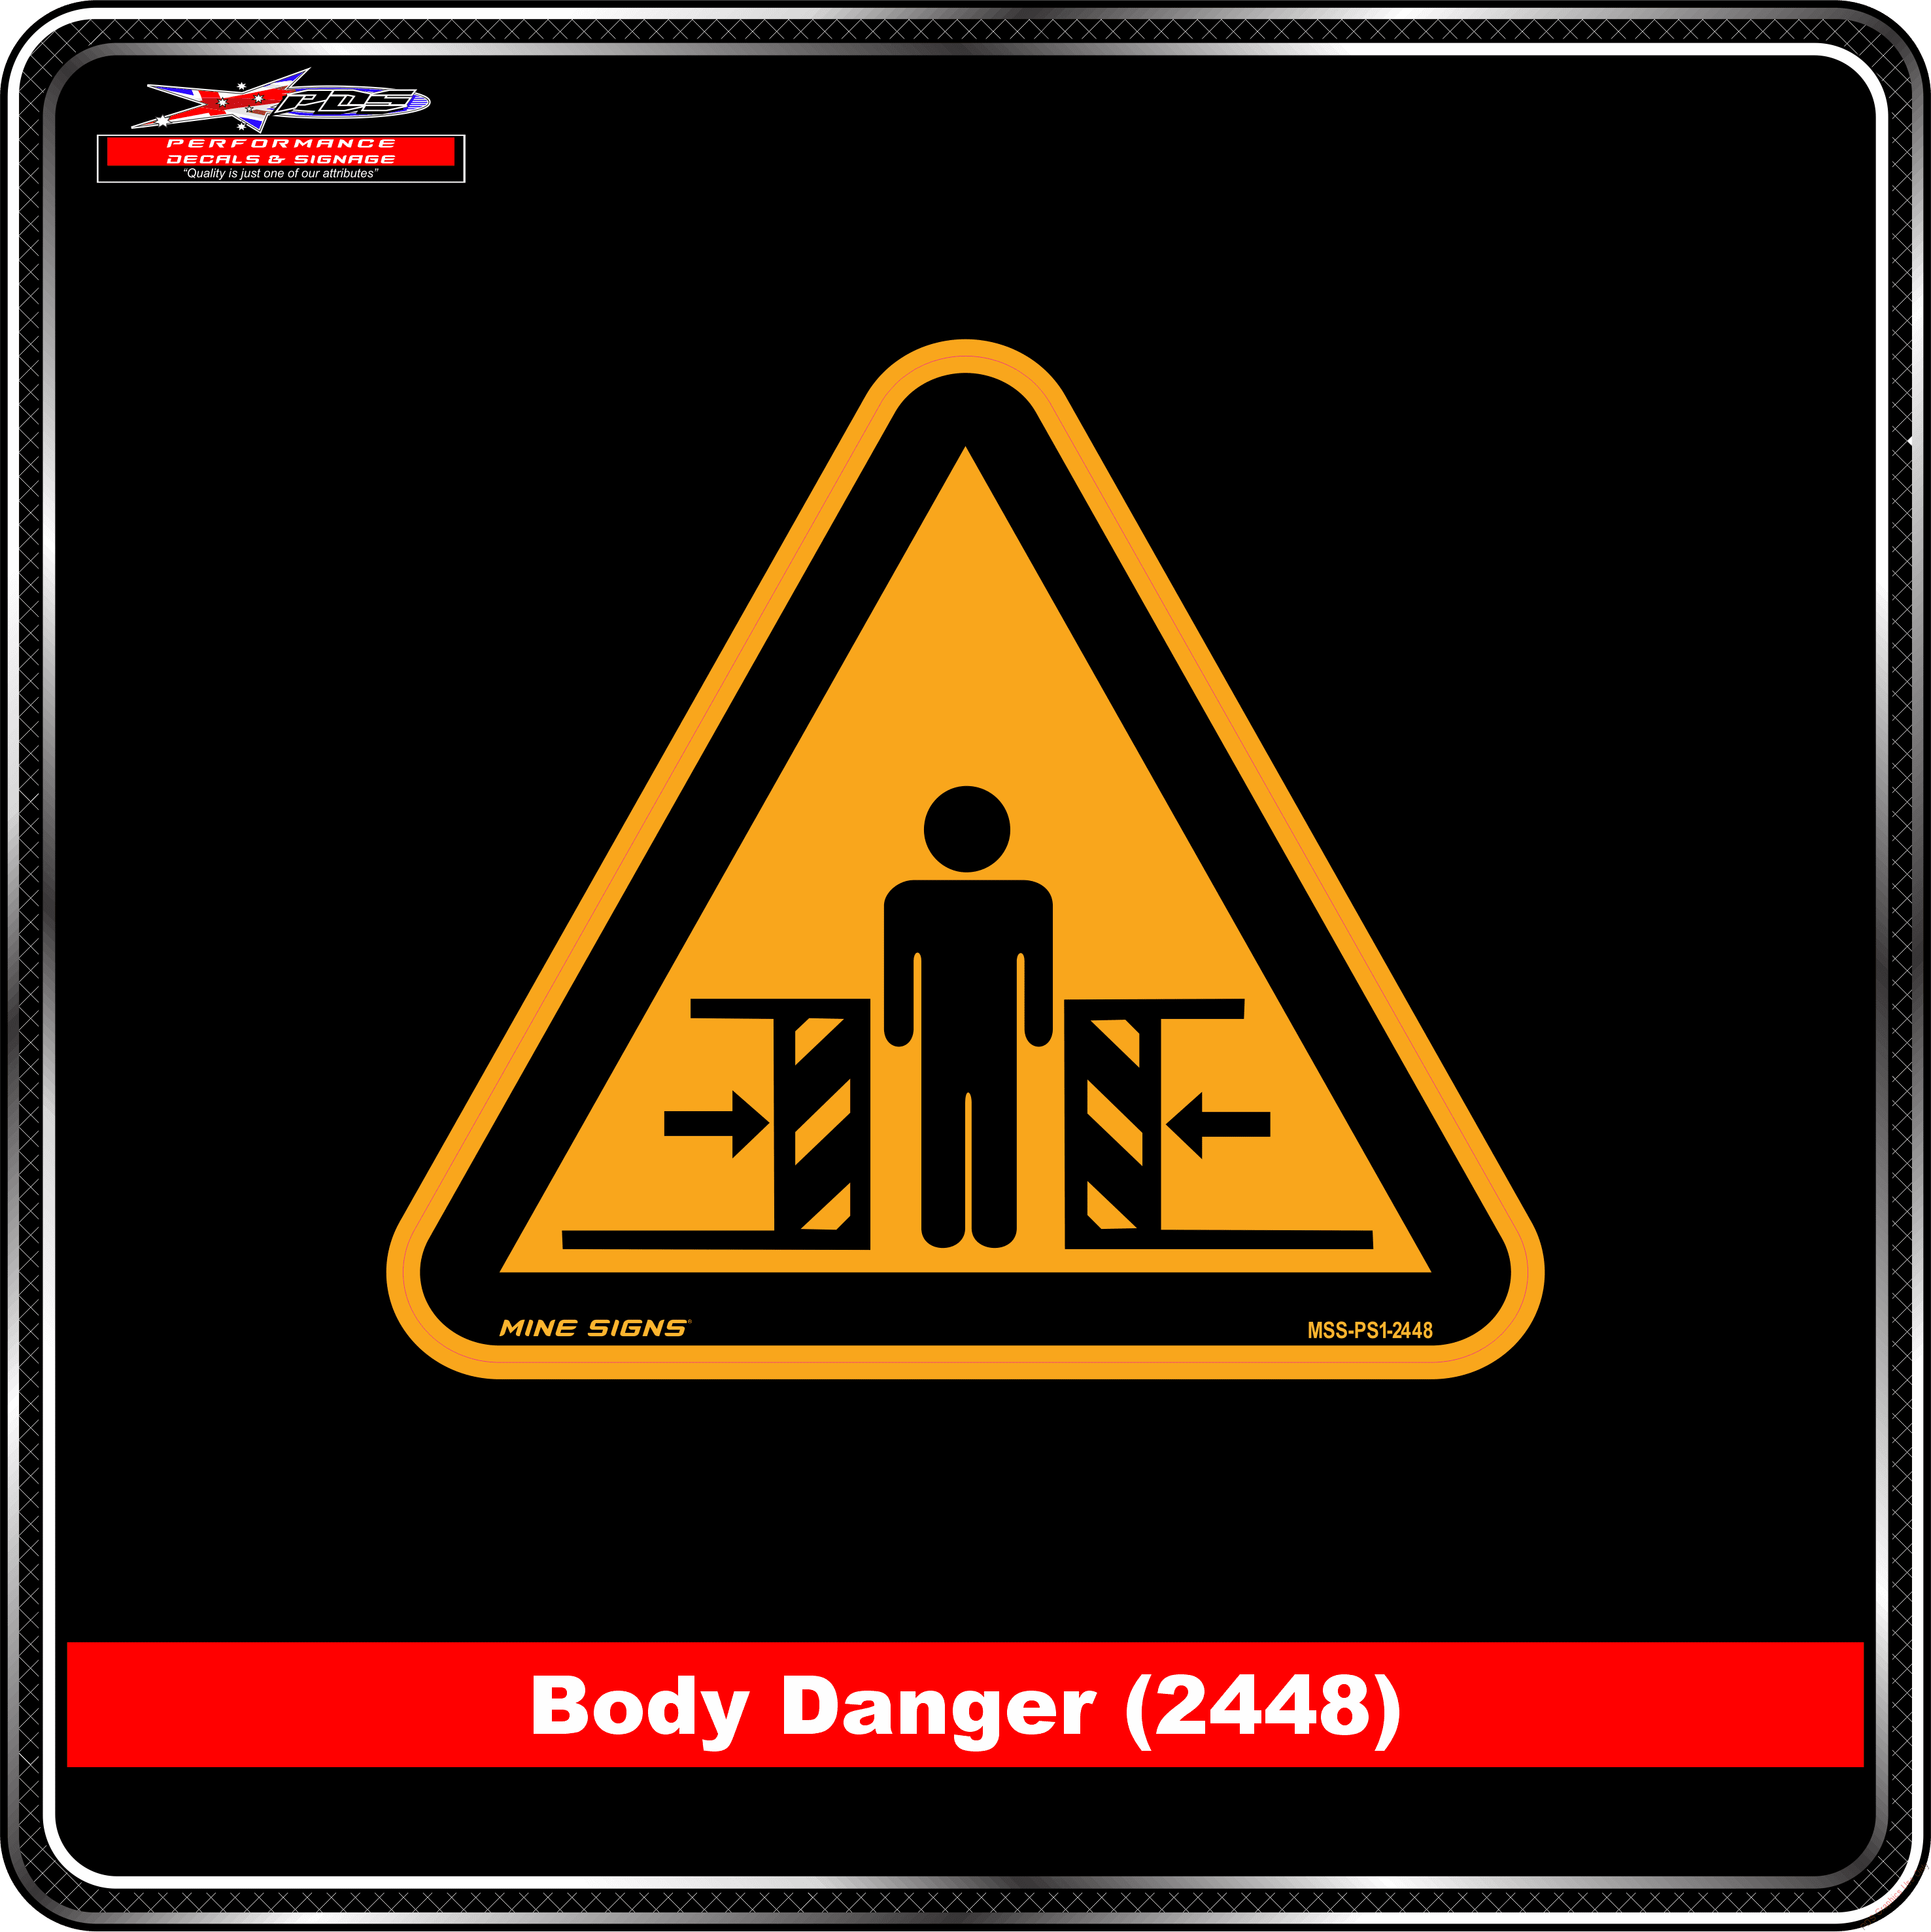 Body Danger (Pictogram 2448) - Performance Decals & Signage